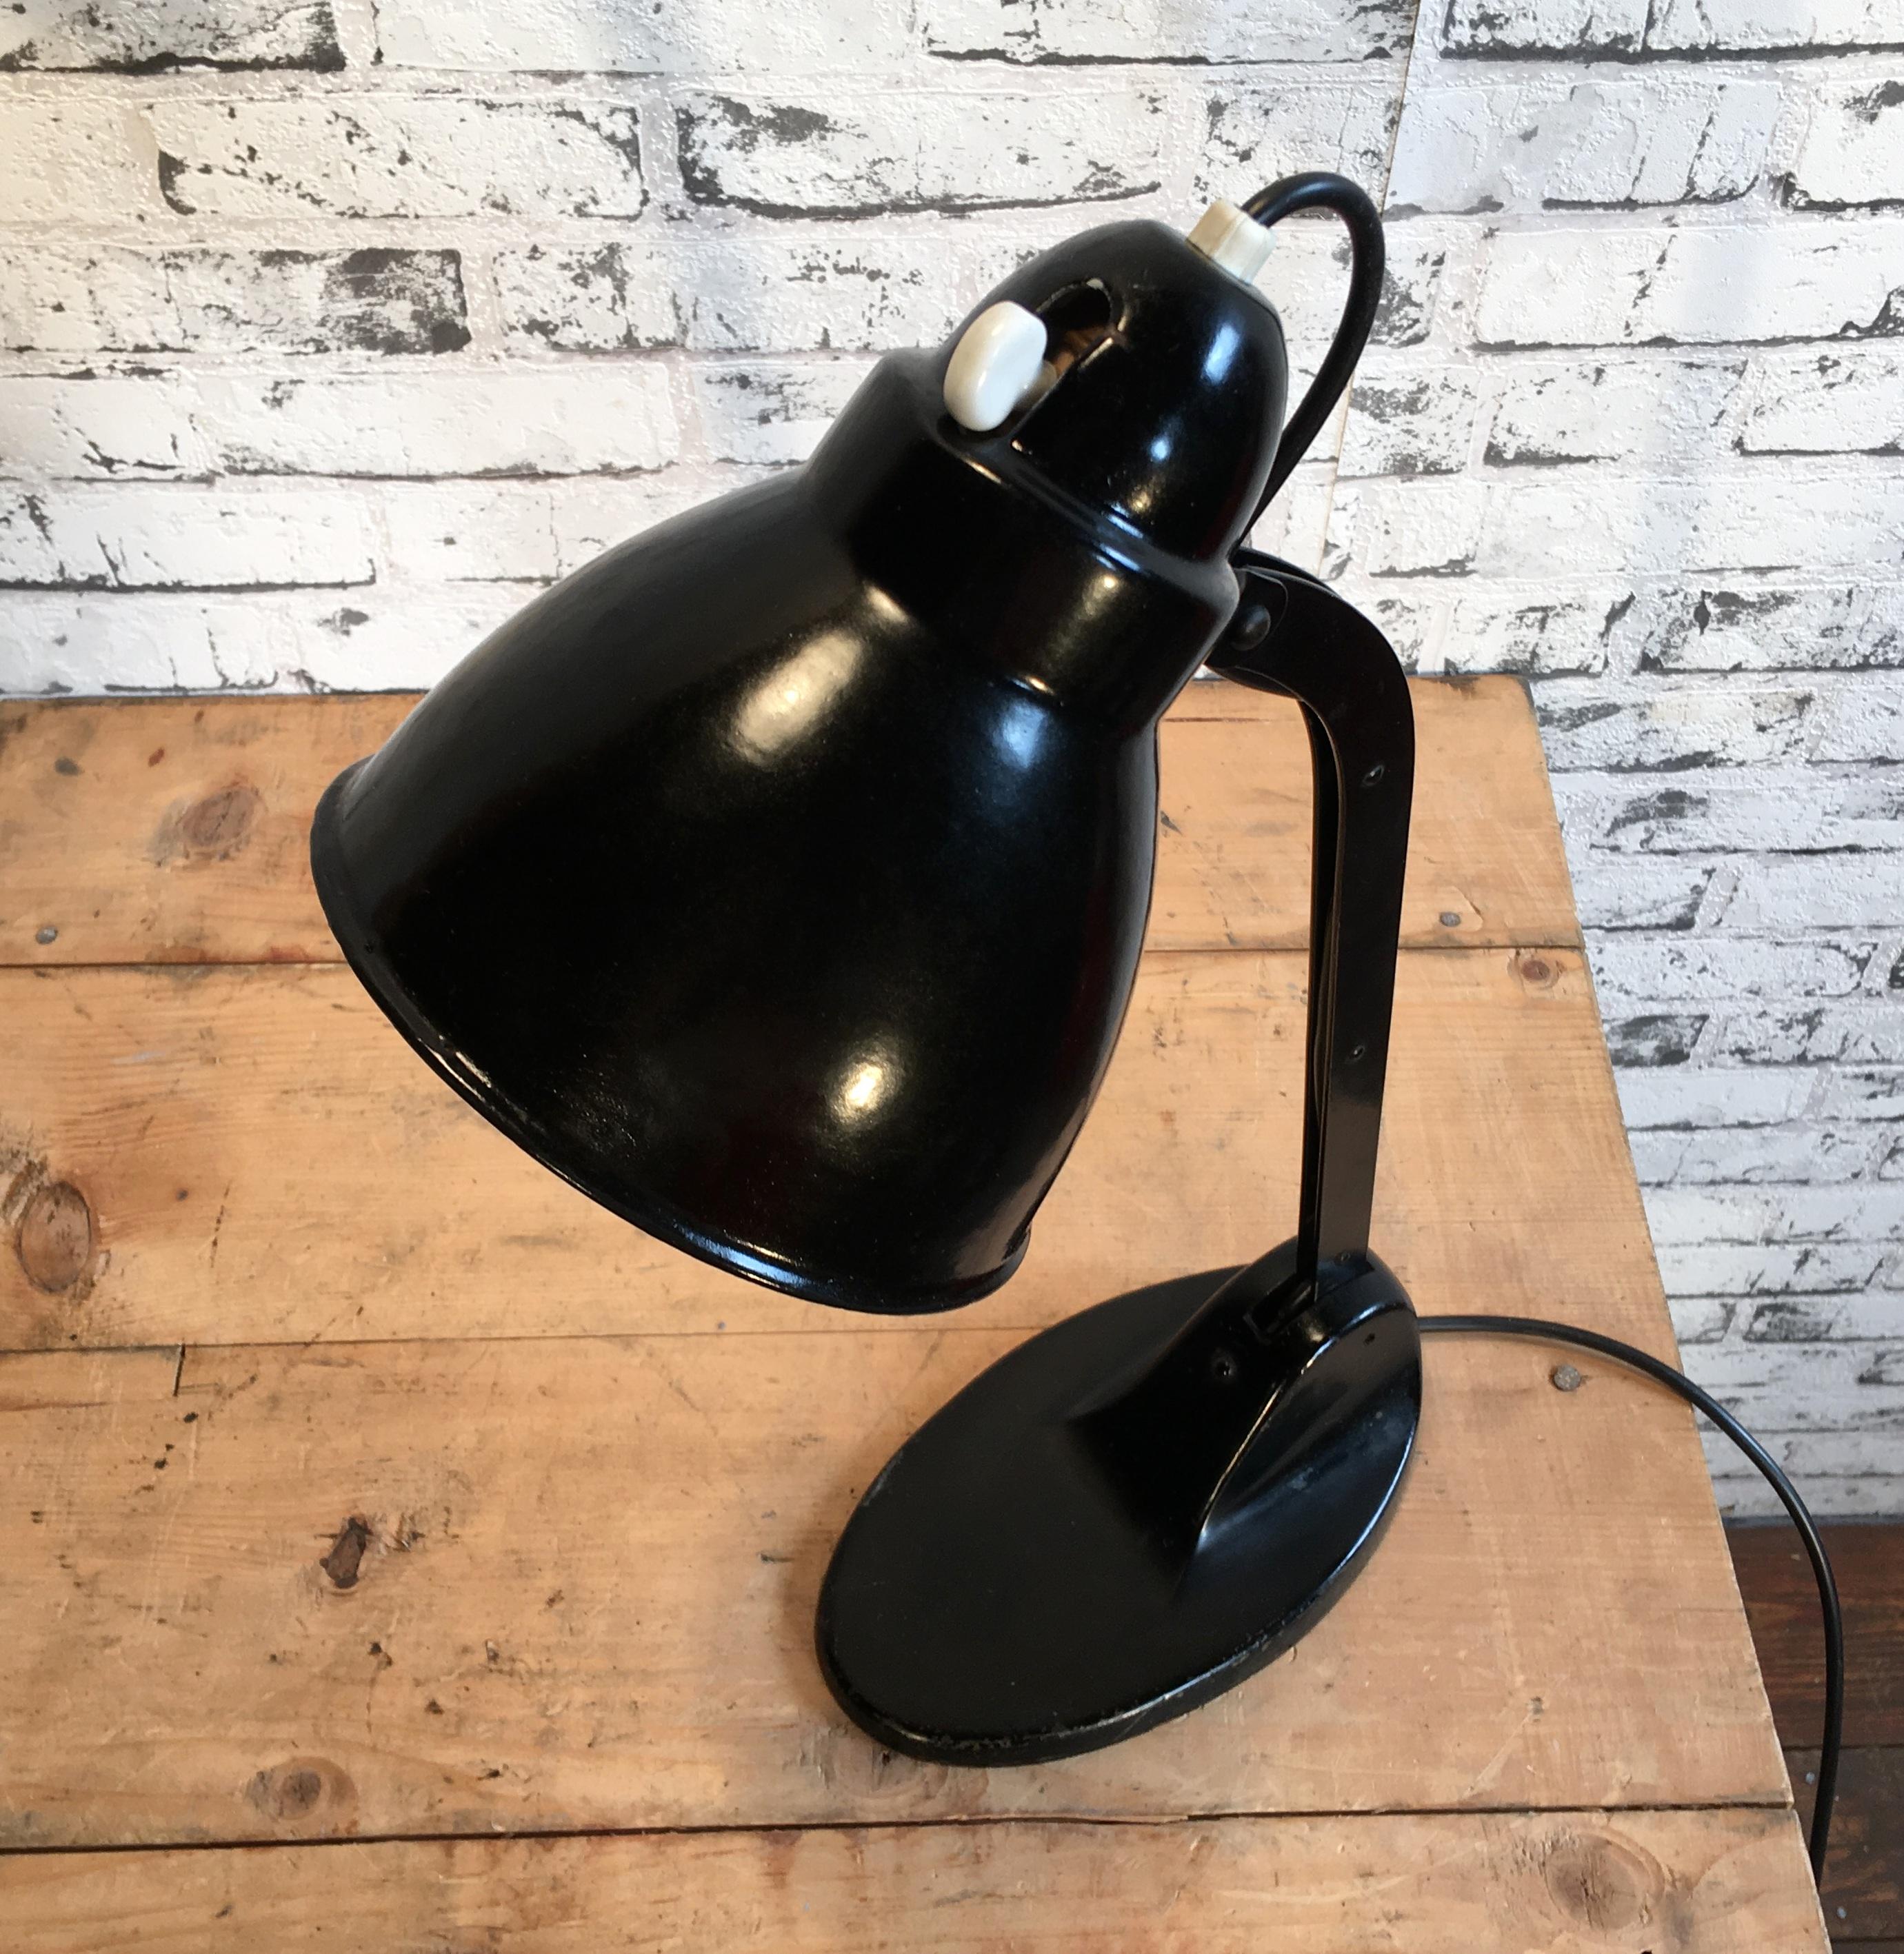 Enameled Black Enamel Industrial Table Lamp From Viktoria Lampe, 1930s